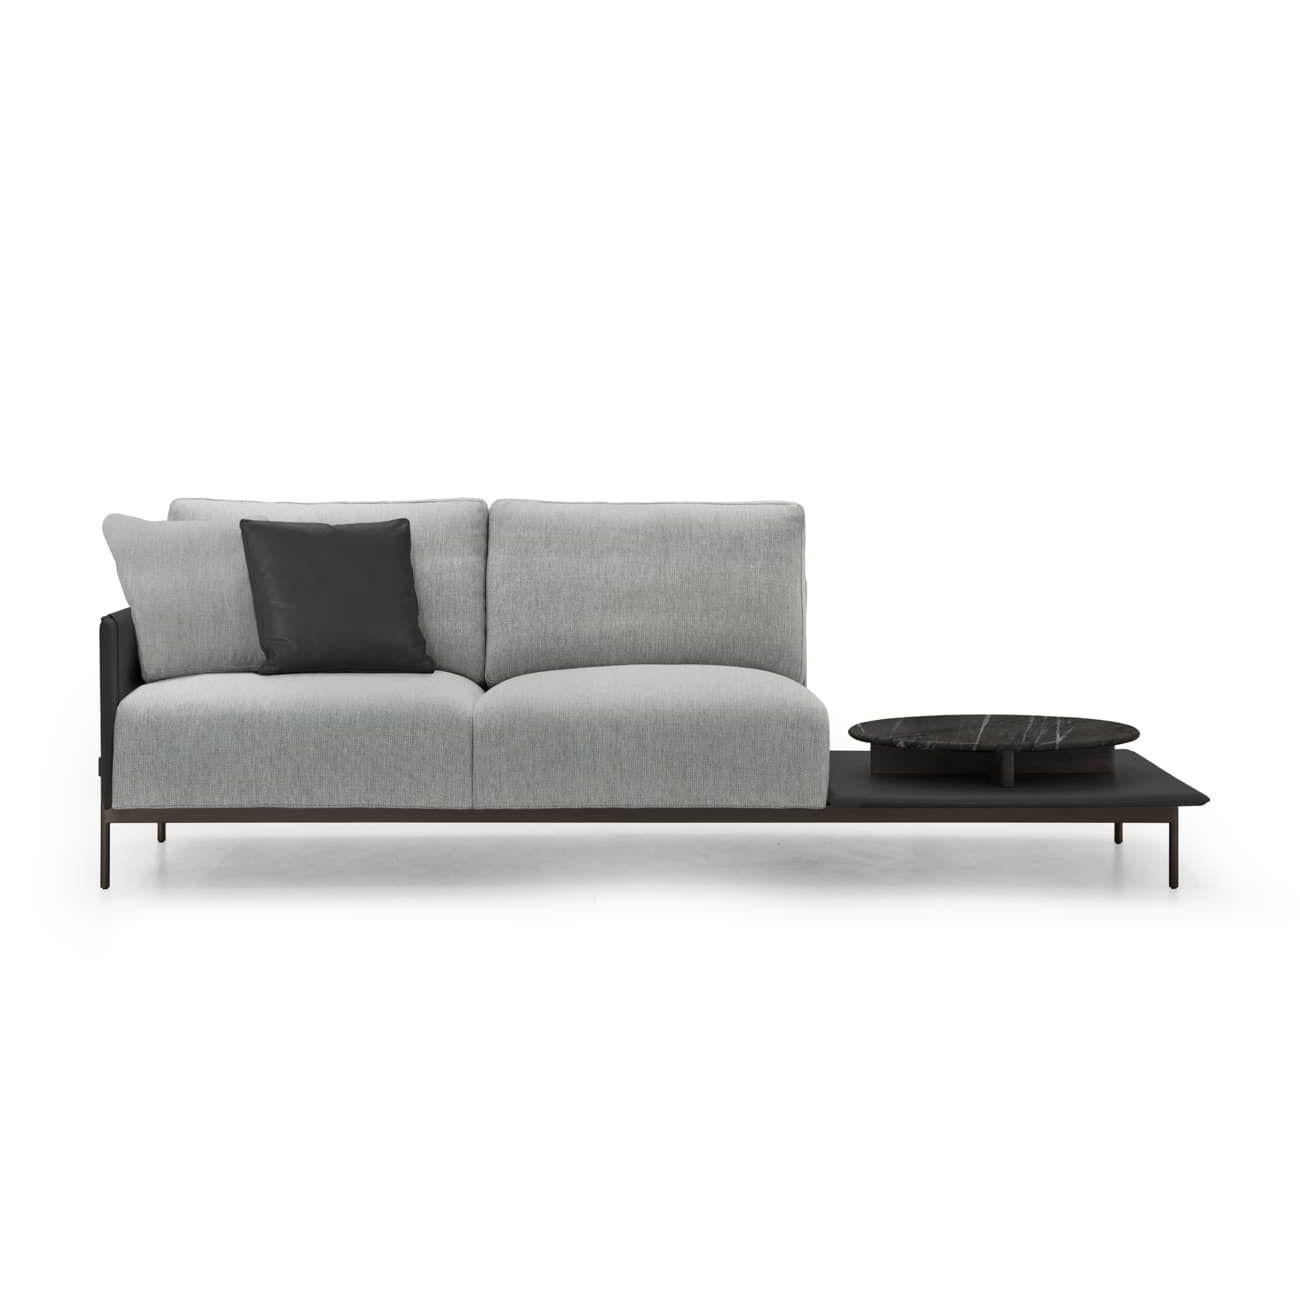 XXIe siècle et contemporain Design Contemporary, Icone Sofa with Tray in Natural Saddle Leather V215/T (canapé avec plateau en cuir sellier naturel) en vente